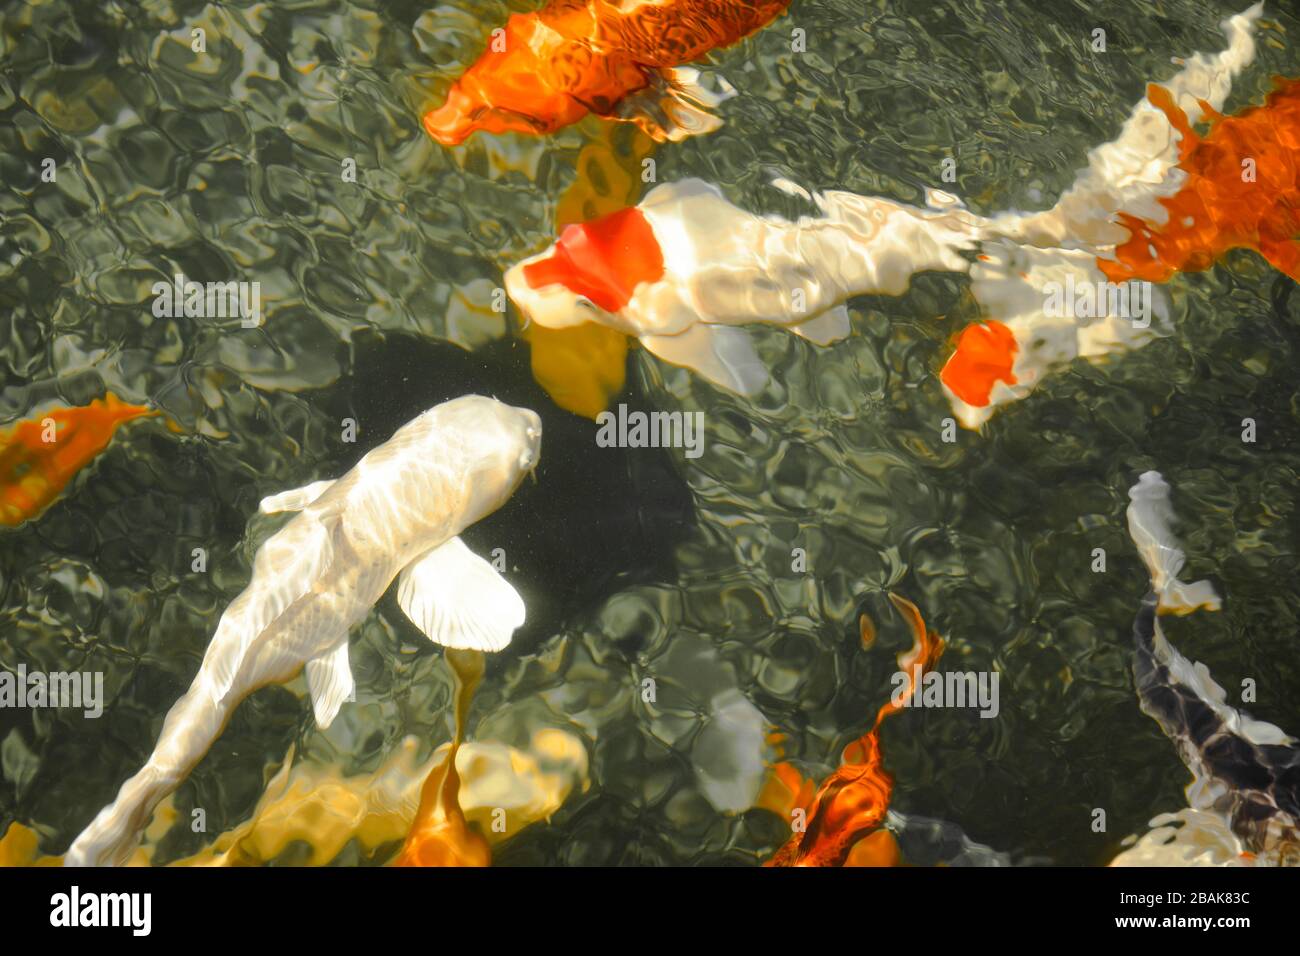 KOI Carp or nishikigoi. Colored varieties of Amur carp (Cyprinus rubrofuscus, Cyprinus carpio) Stock Photo